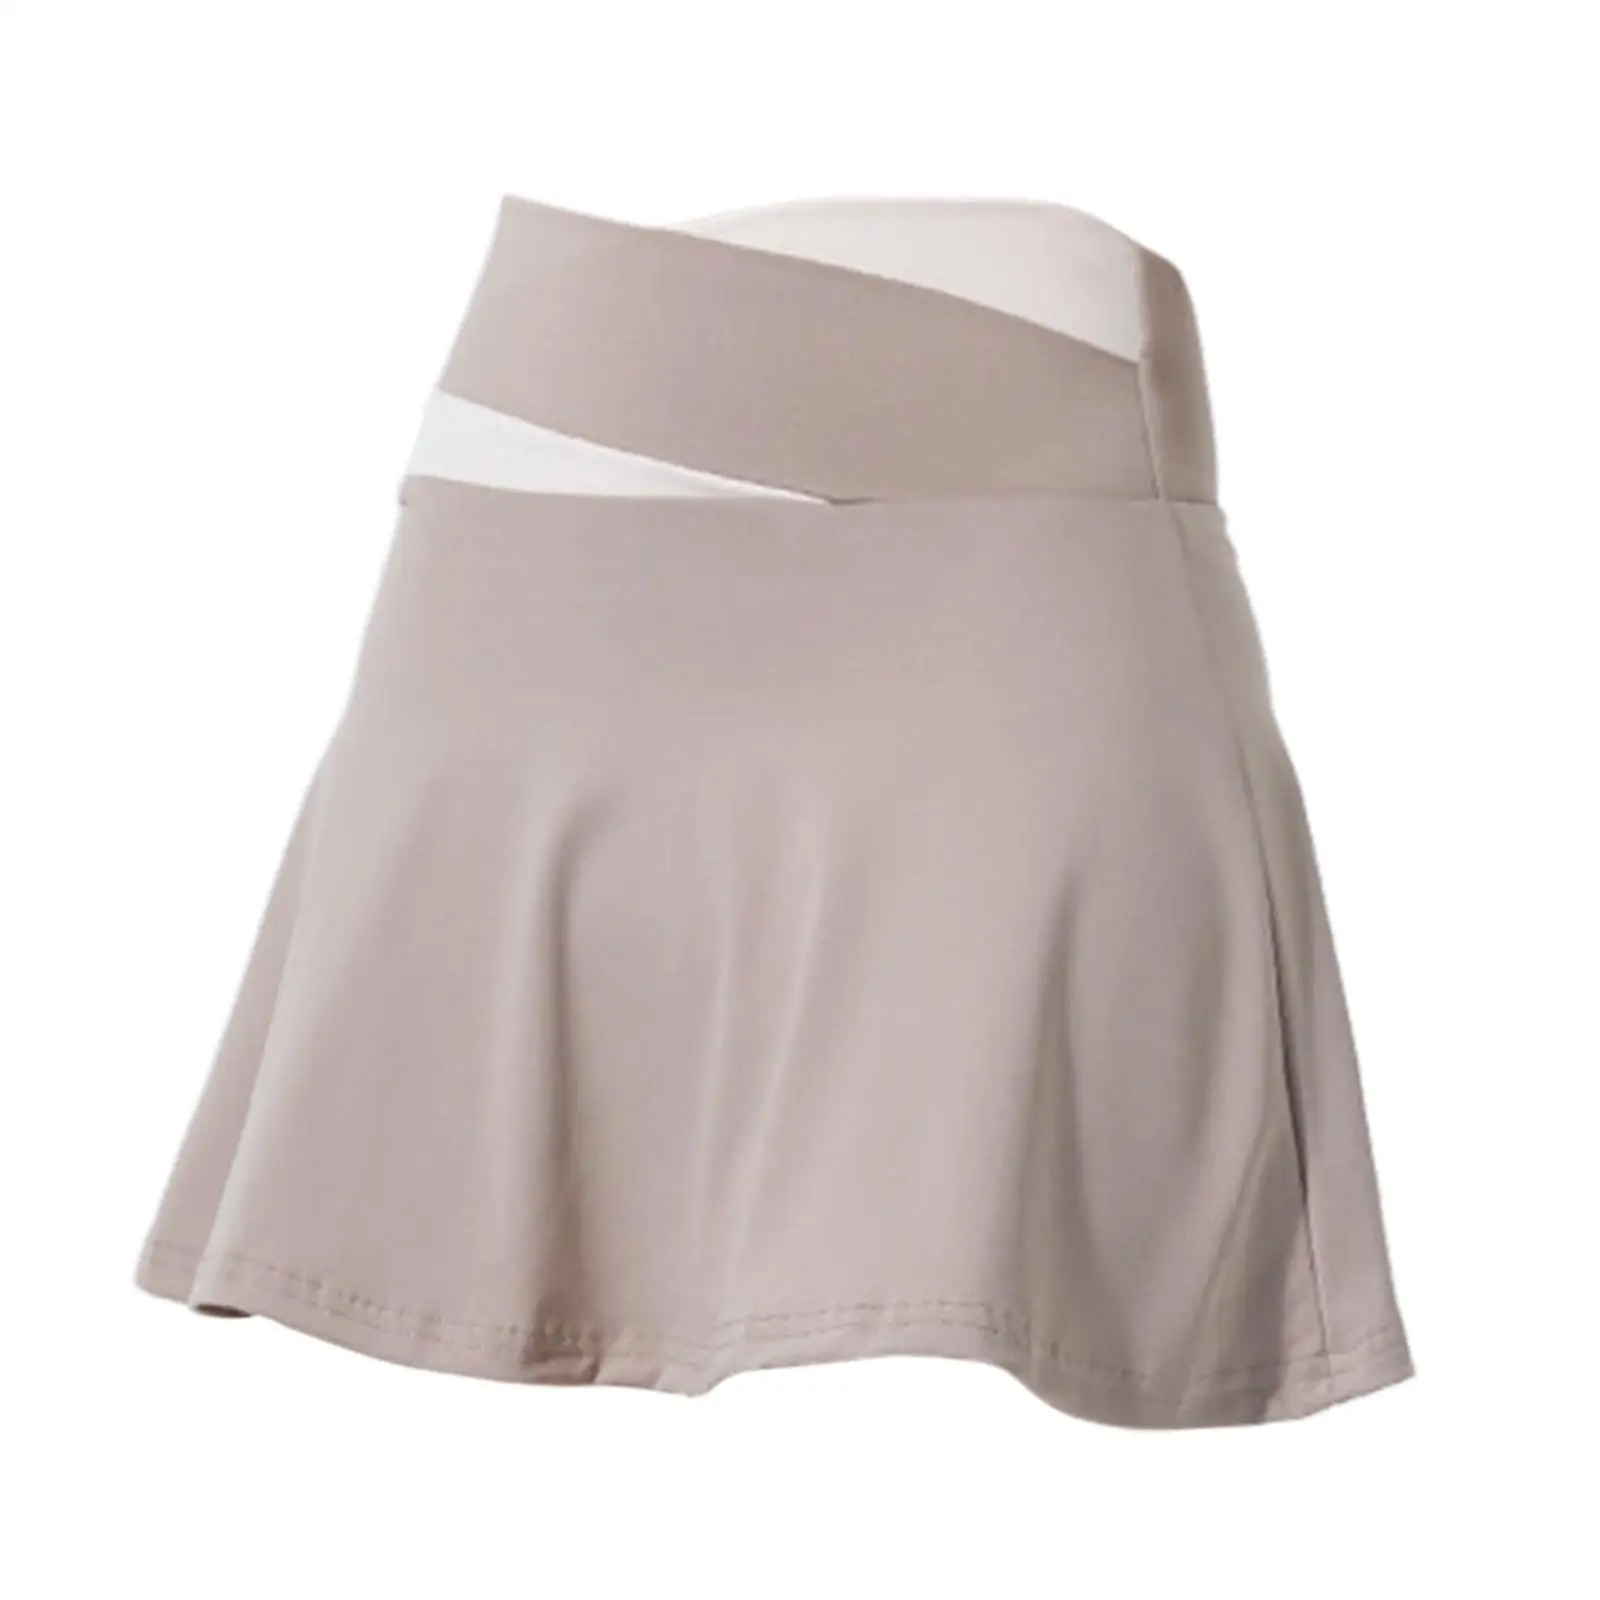 Tennis Skirts Short Skirts Soft Lightweight Anti Exposure High Waist Ladies Golf Skorts Skirts for Tennis Gym Sport Jogging